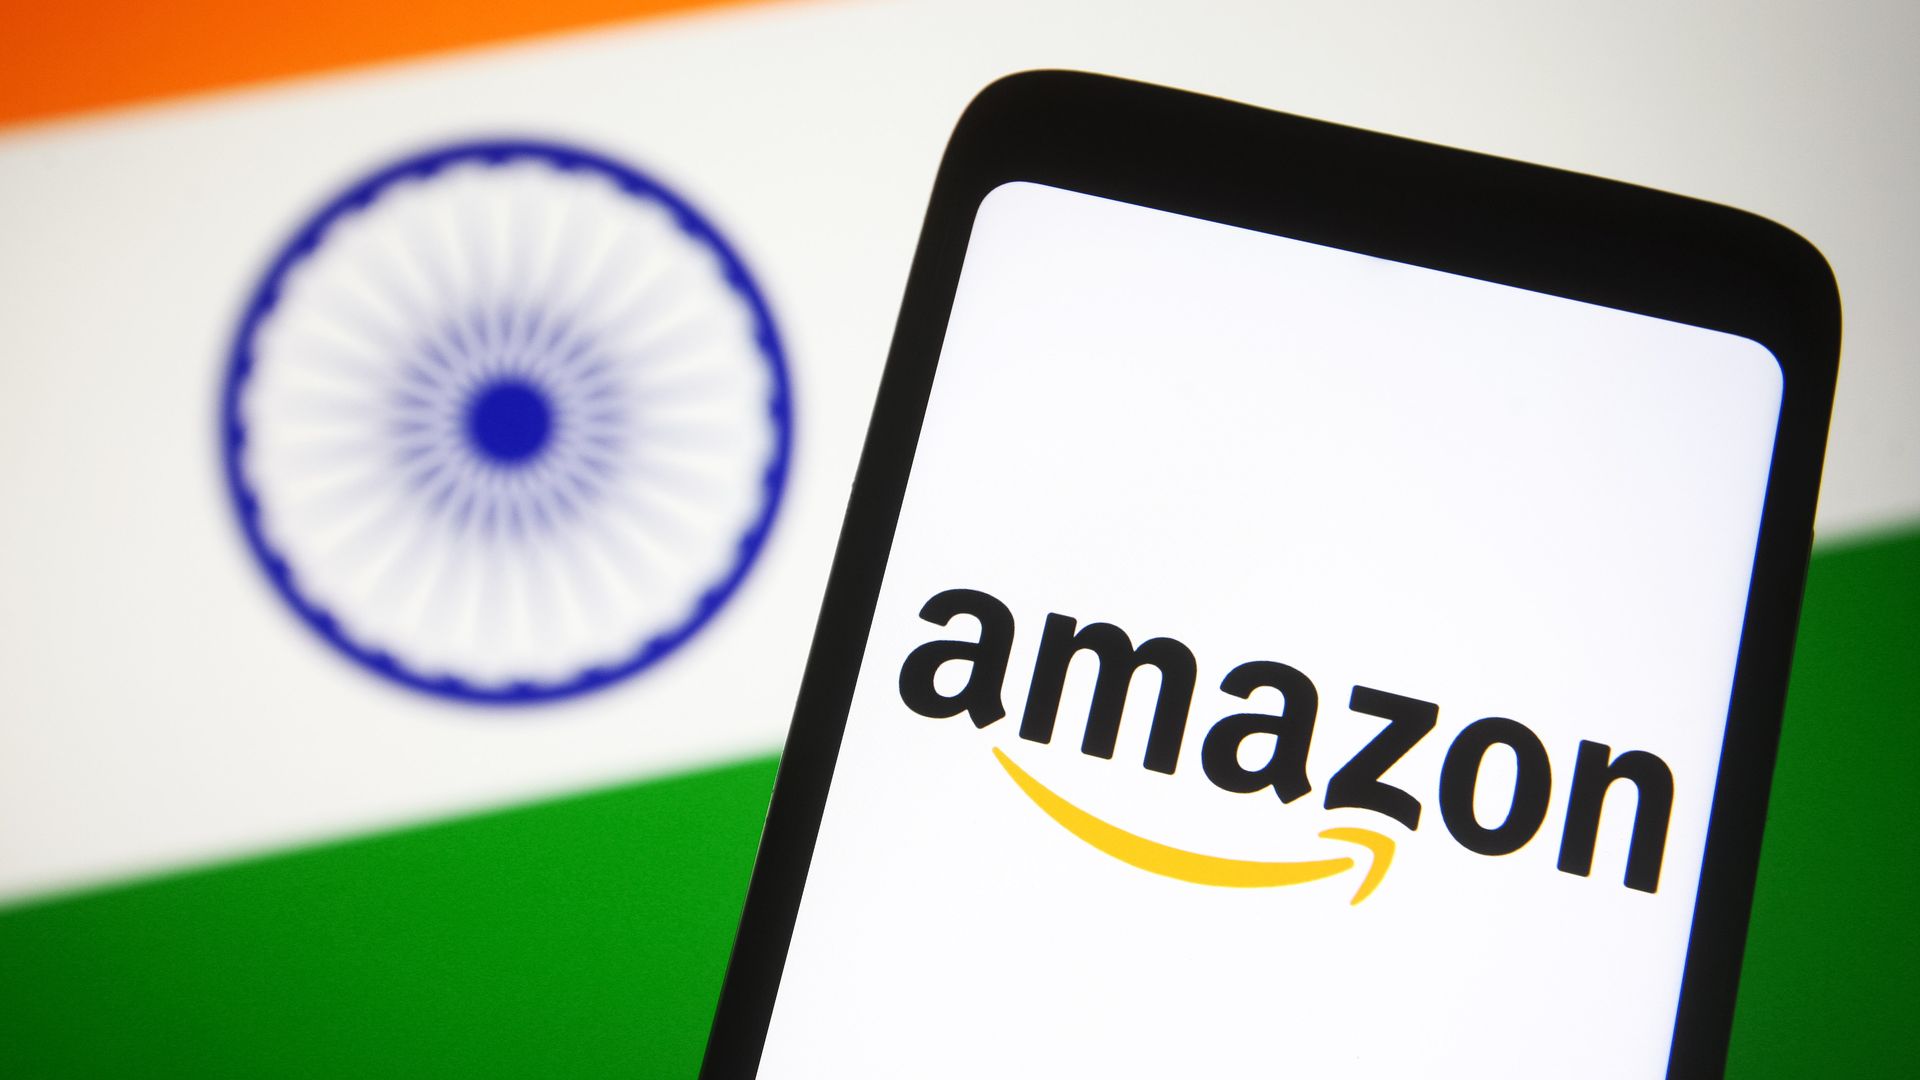 Amazon logo in India.